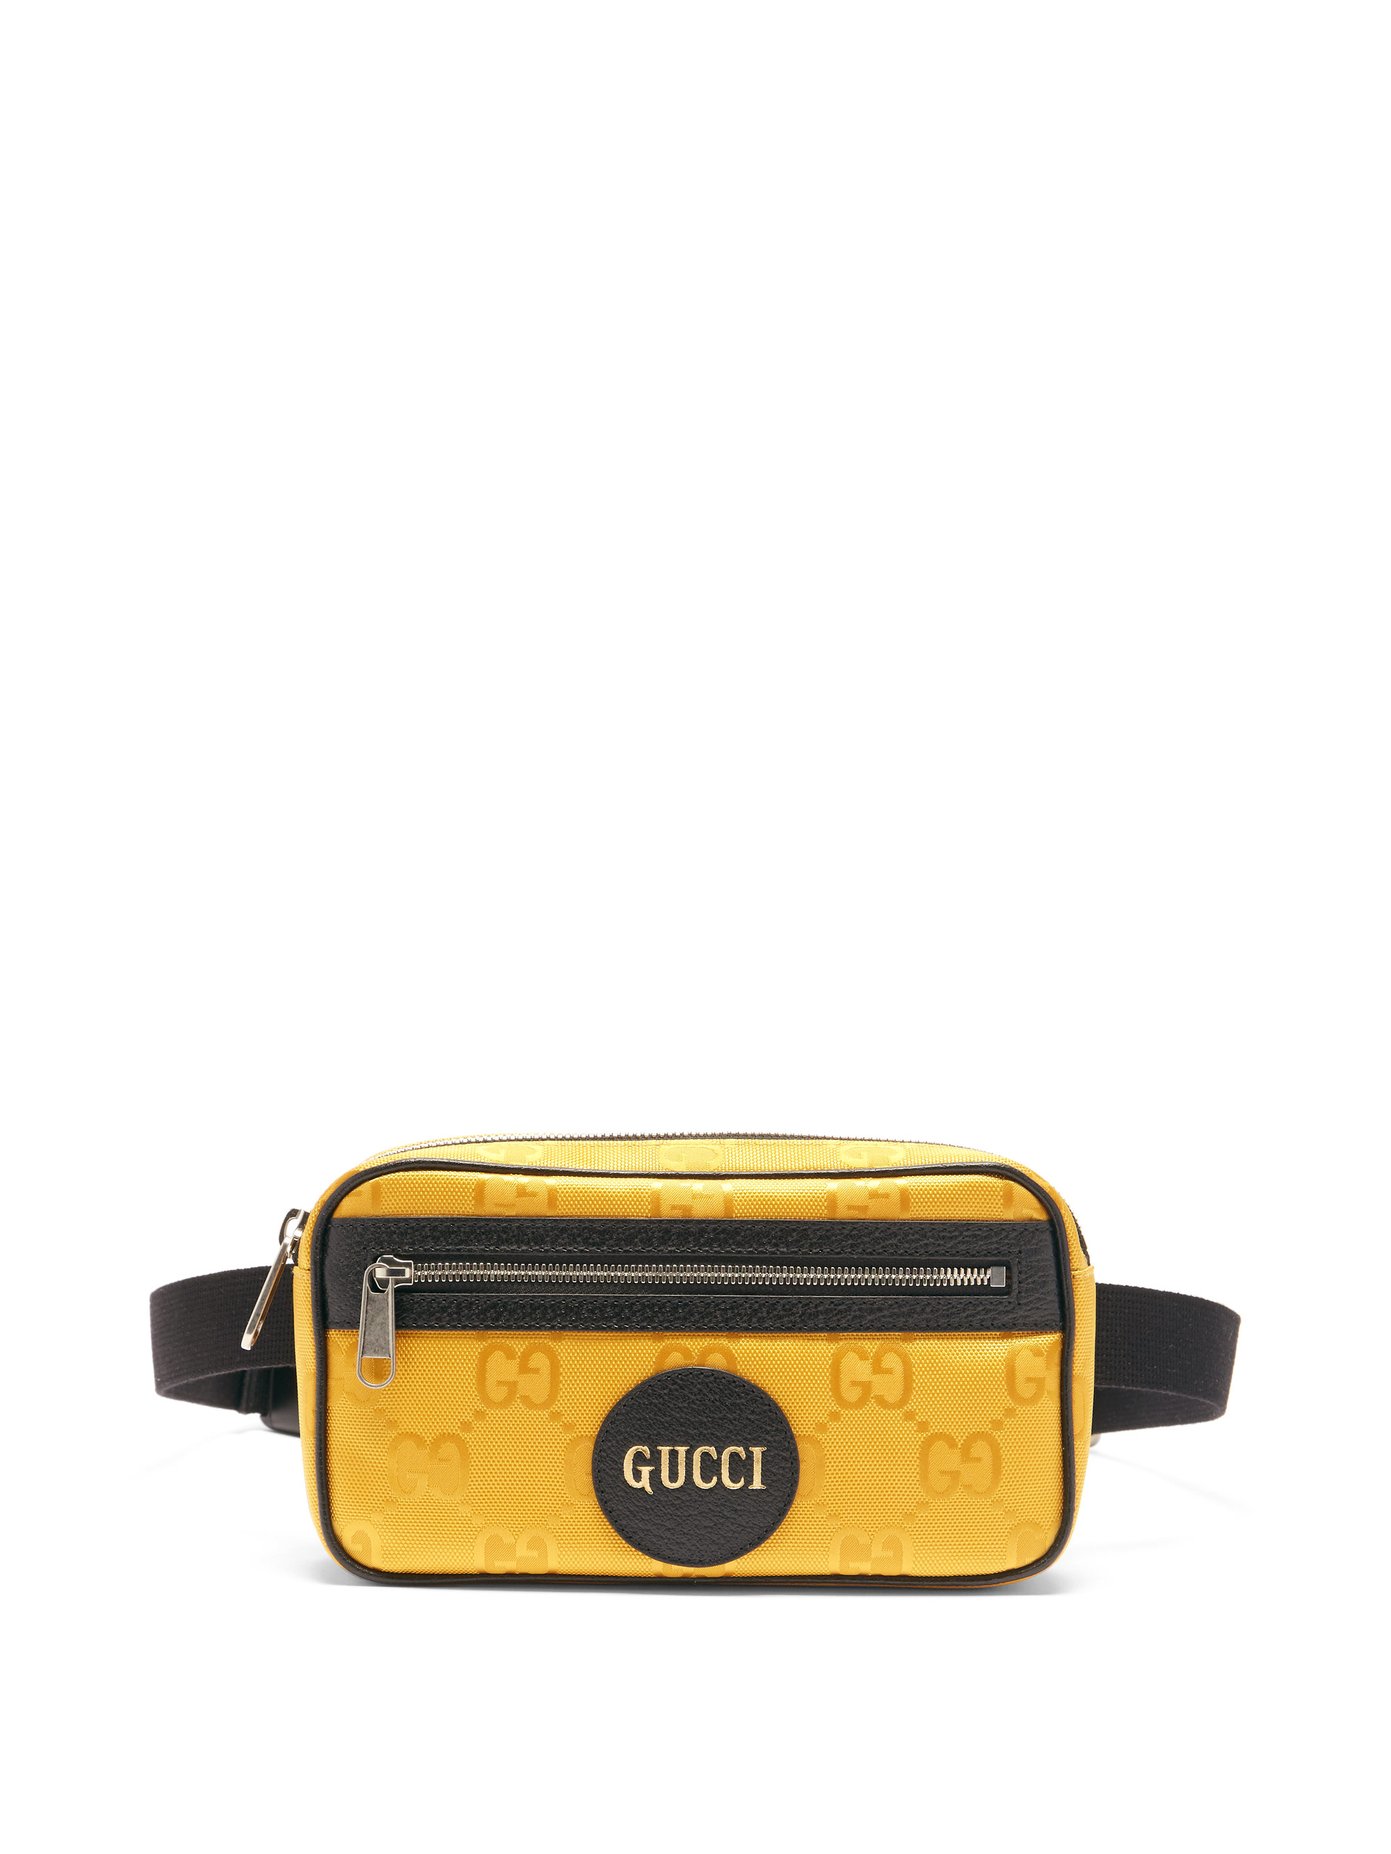 gucci belt bag uk